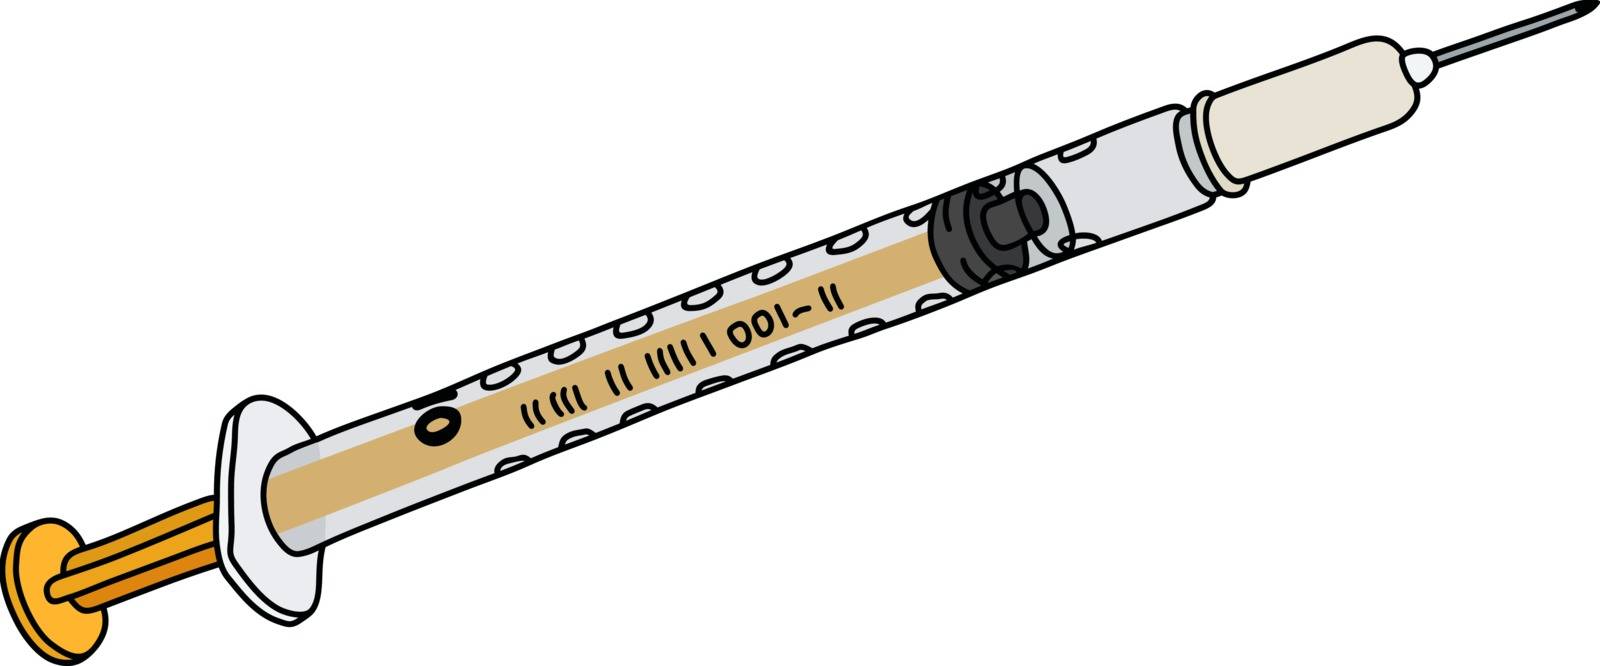 The plastic thin syringe by vostal